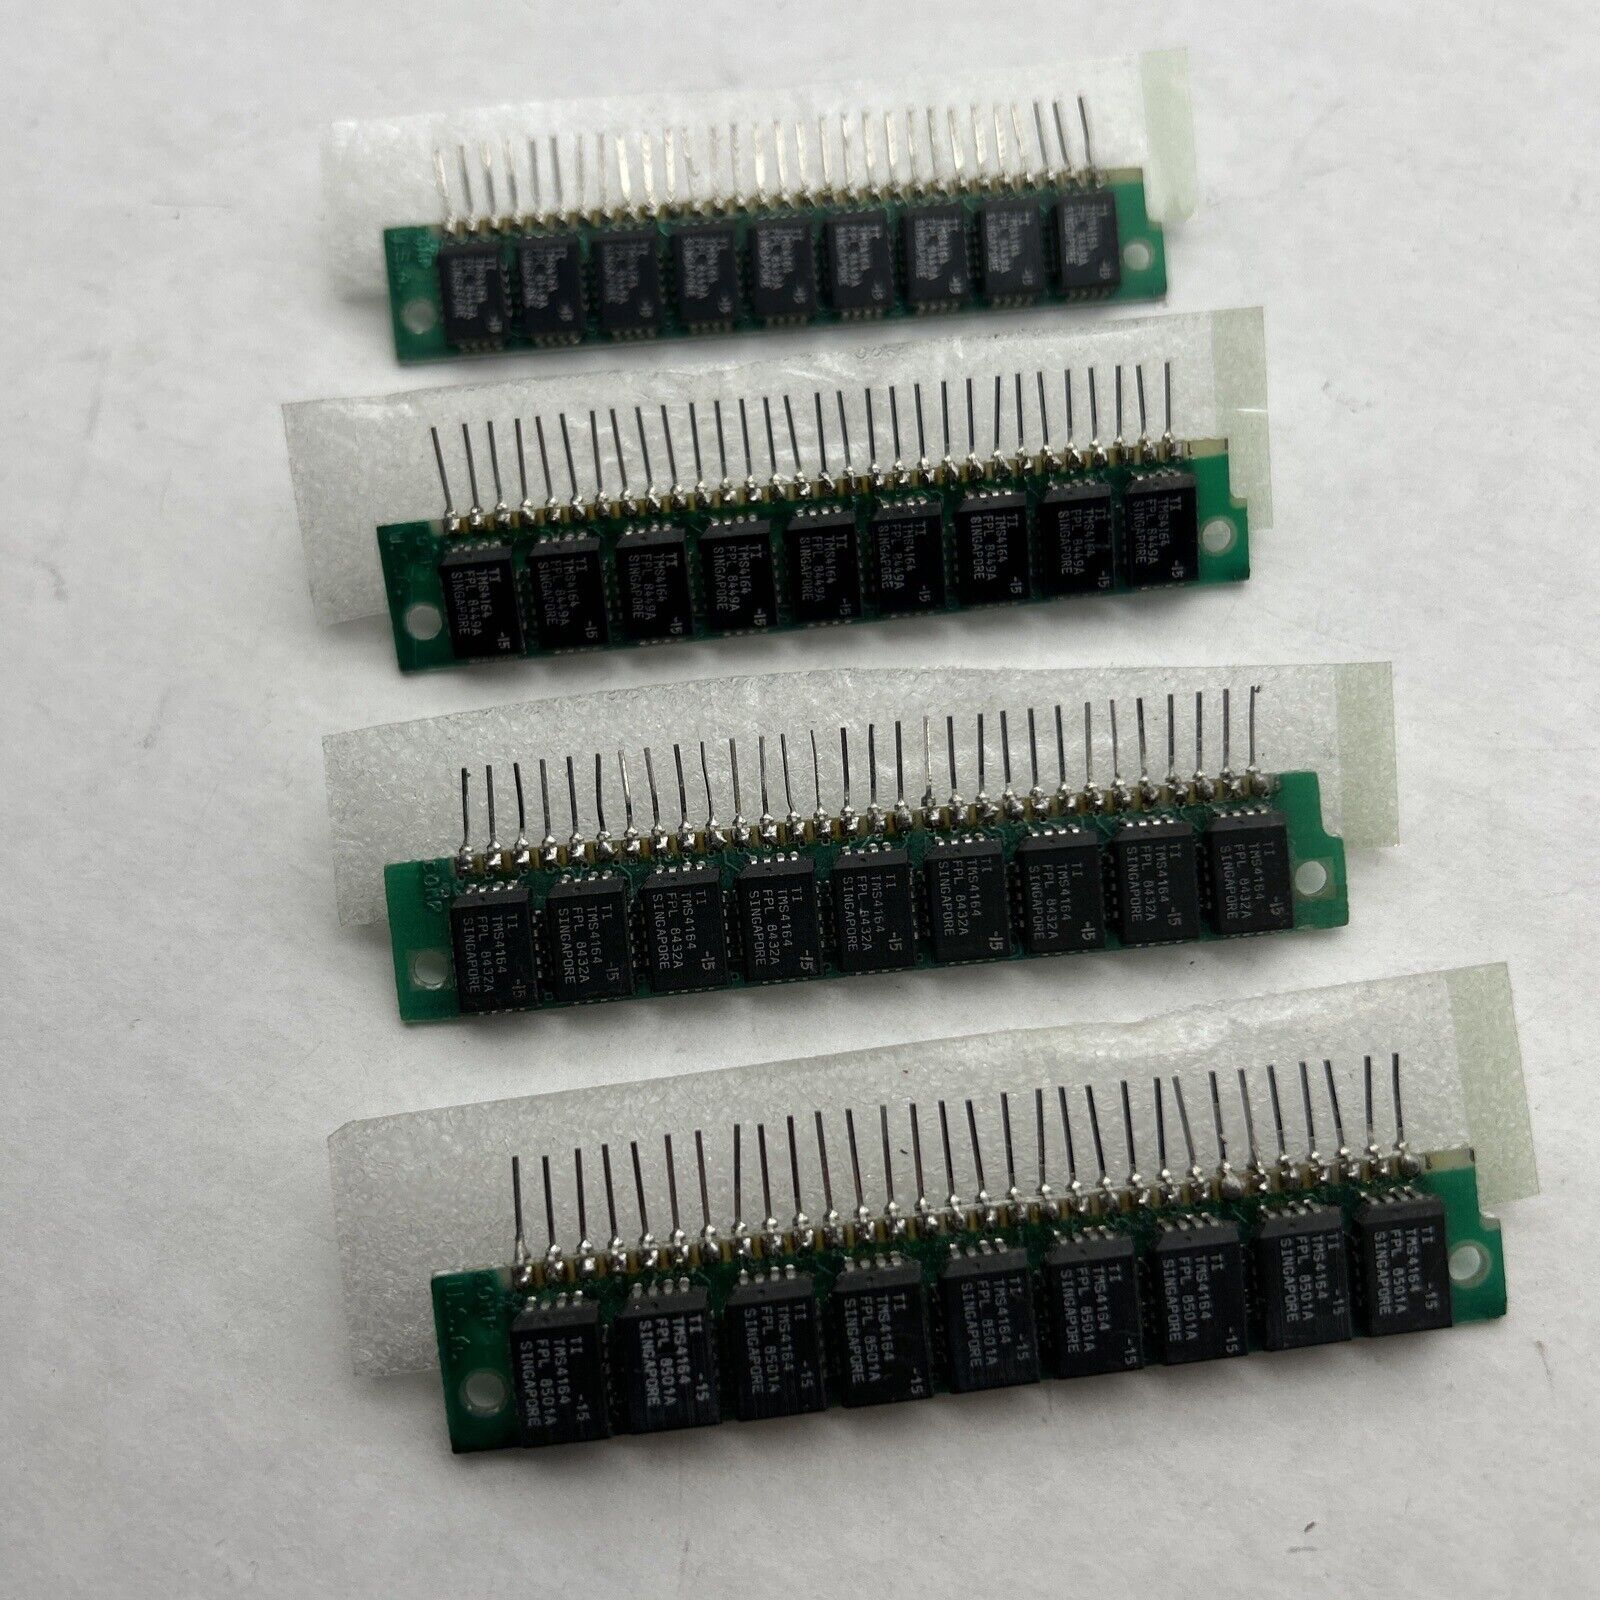 1MB (4) x 256K SIPP Memory Module, 150ns, 1x9 9 Chip Parity Ram Very Rare